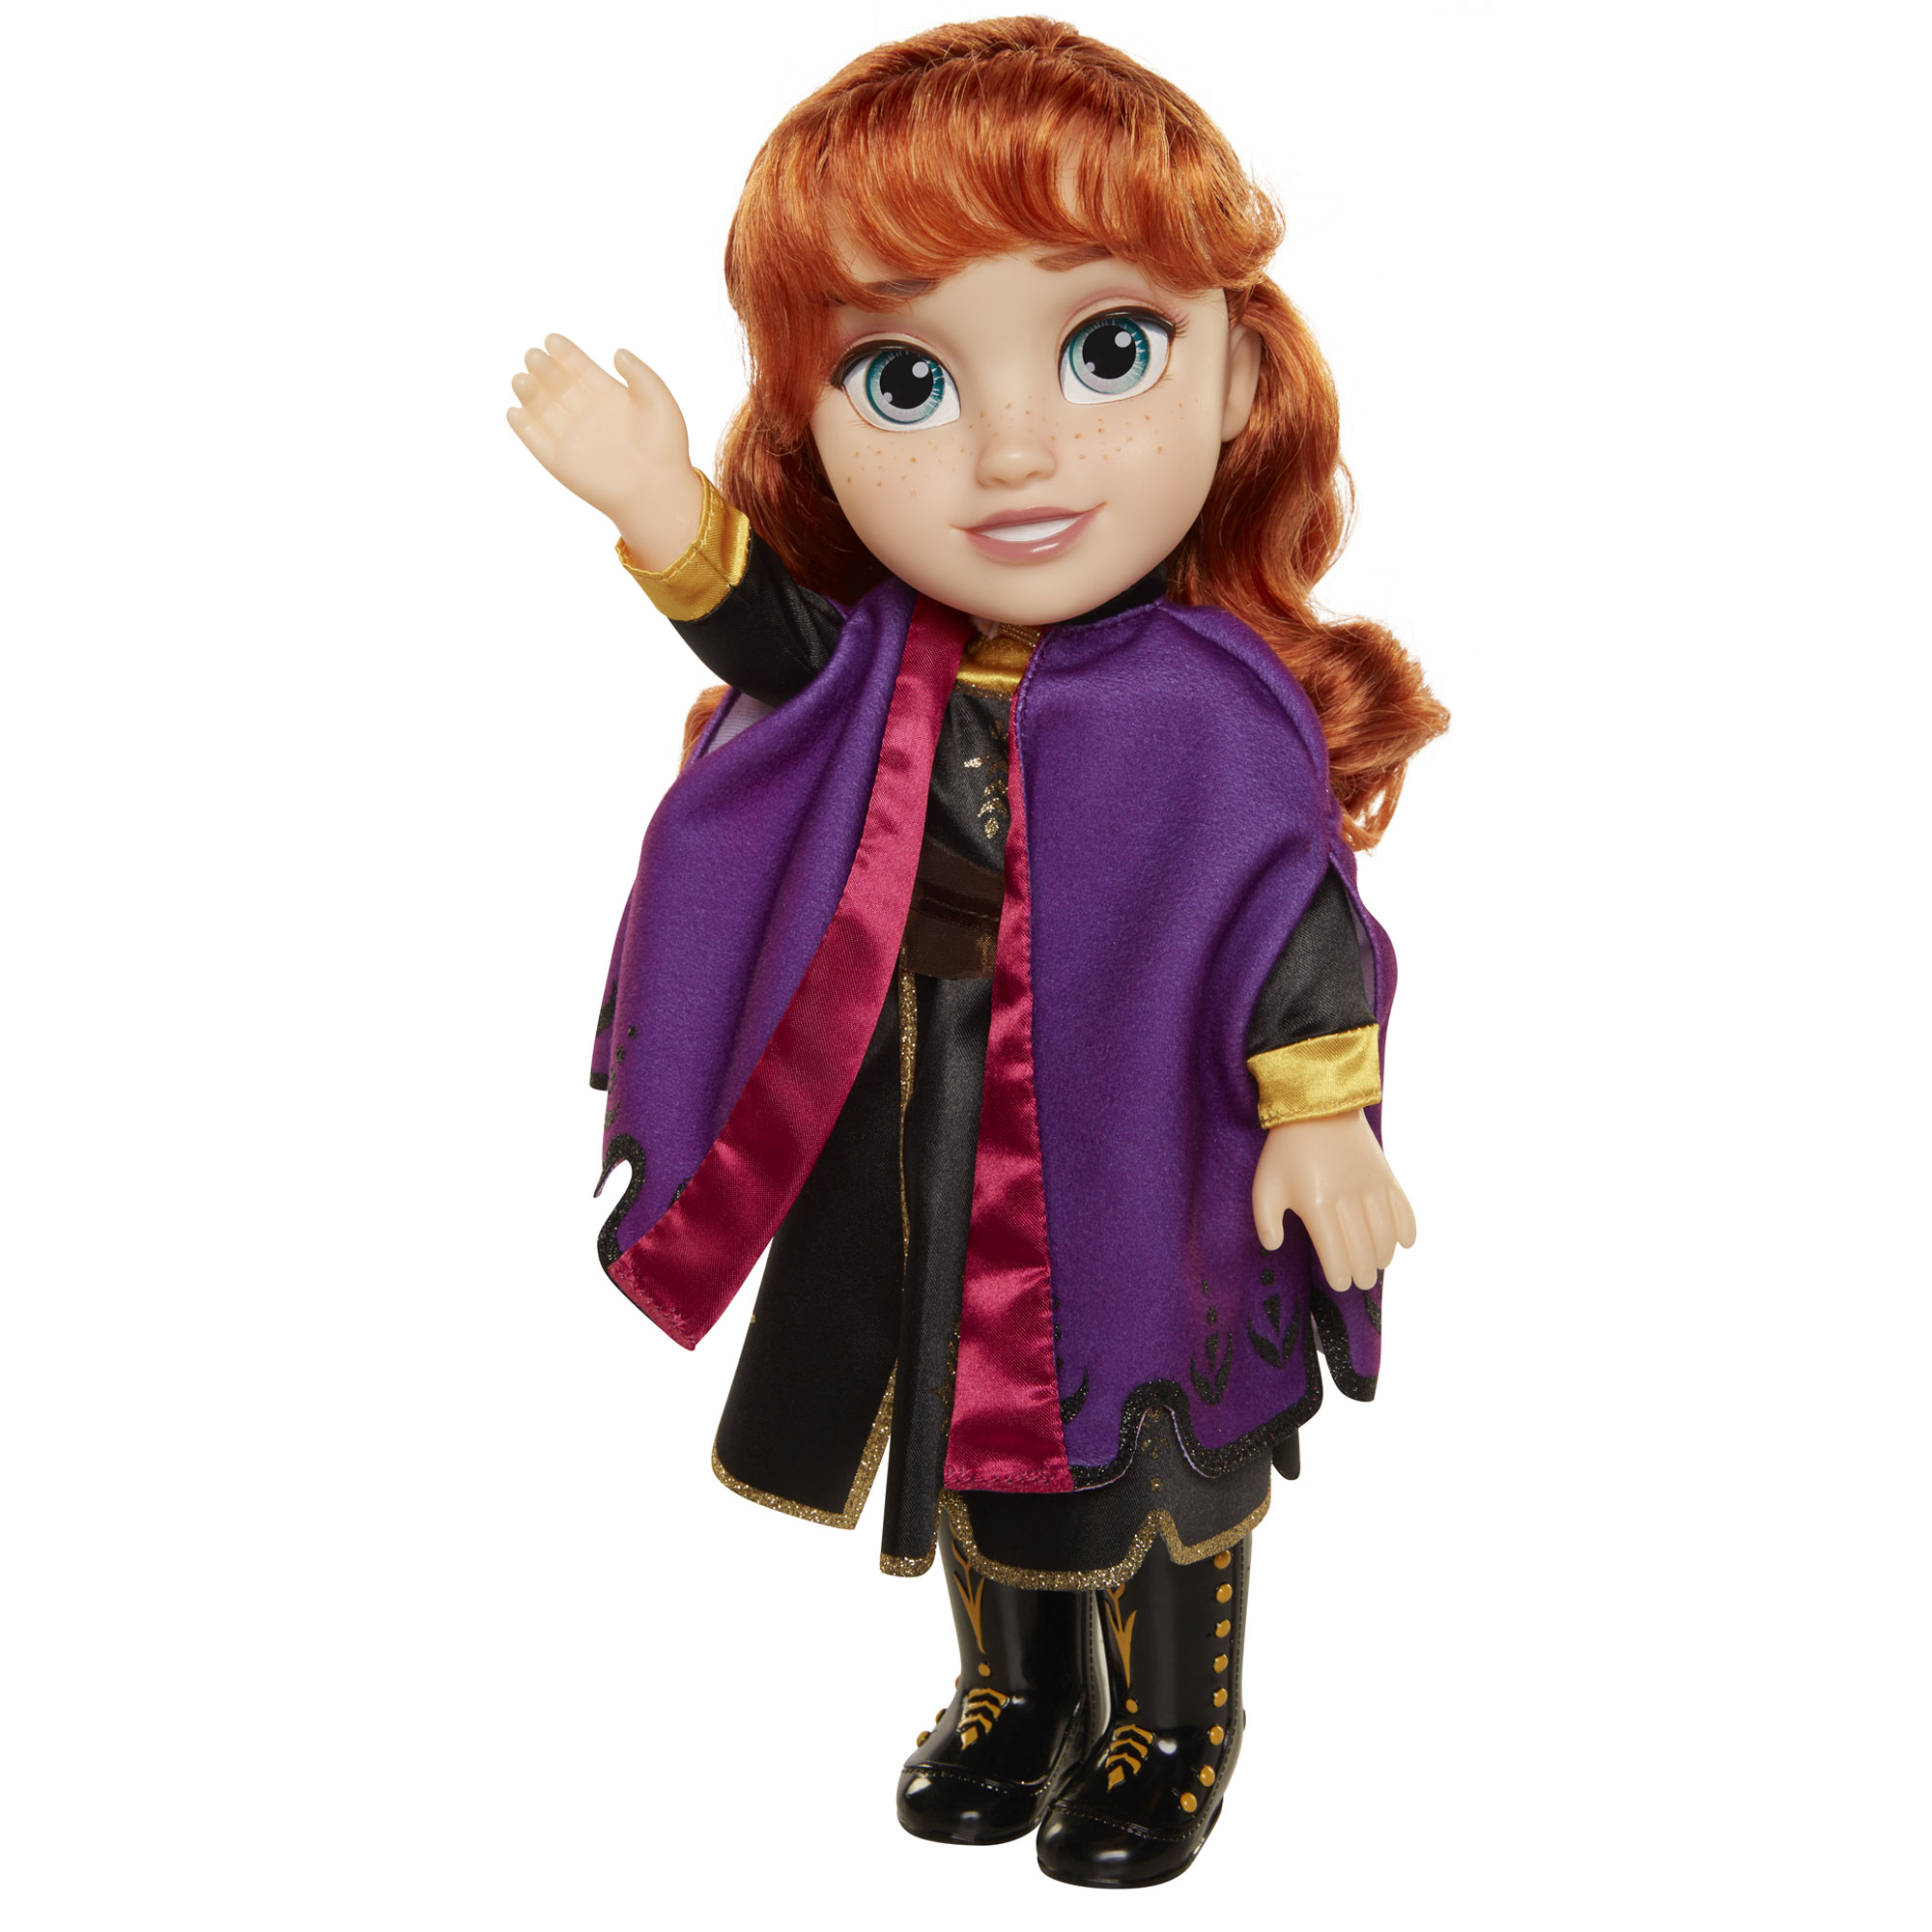 Disney Frozen 2 Princess Anna Adventure Doll